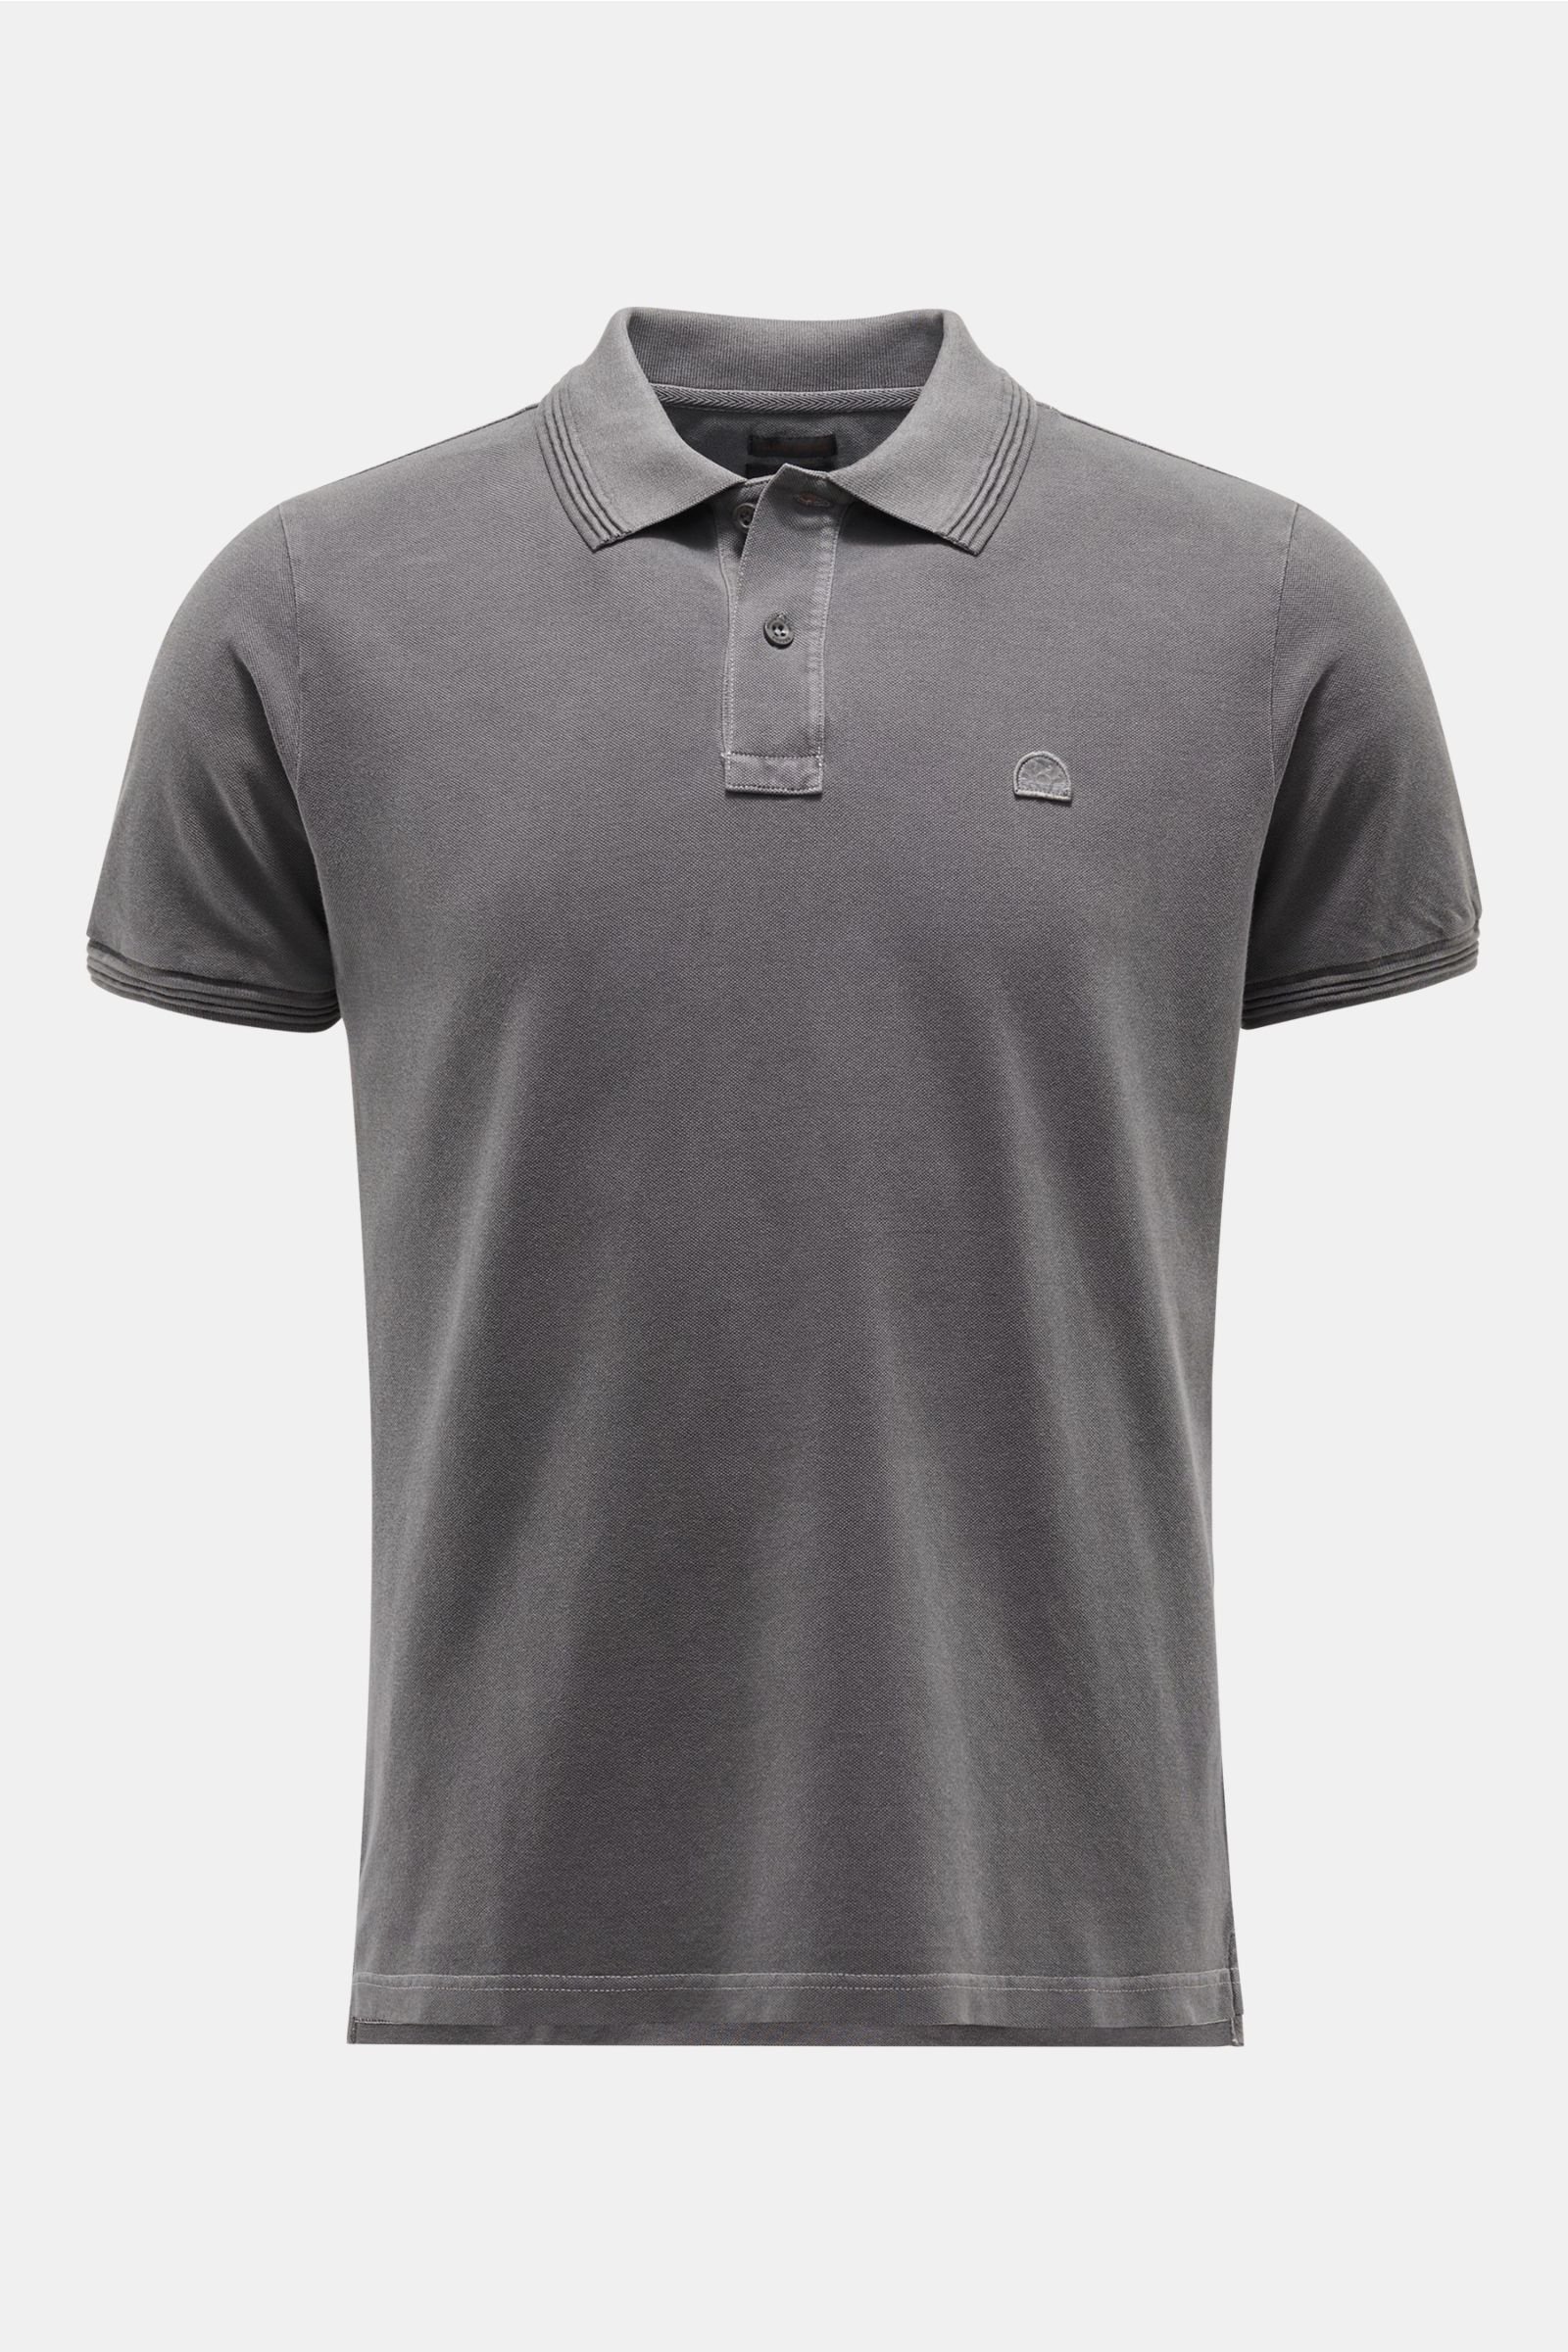 Polo shirt dark grey